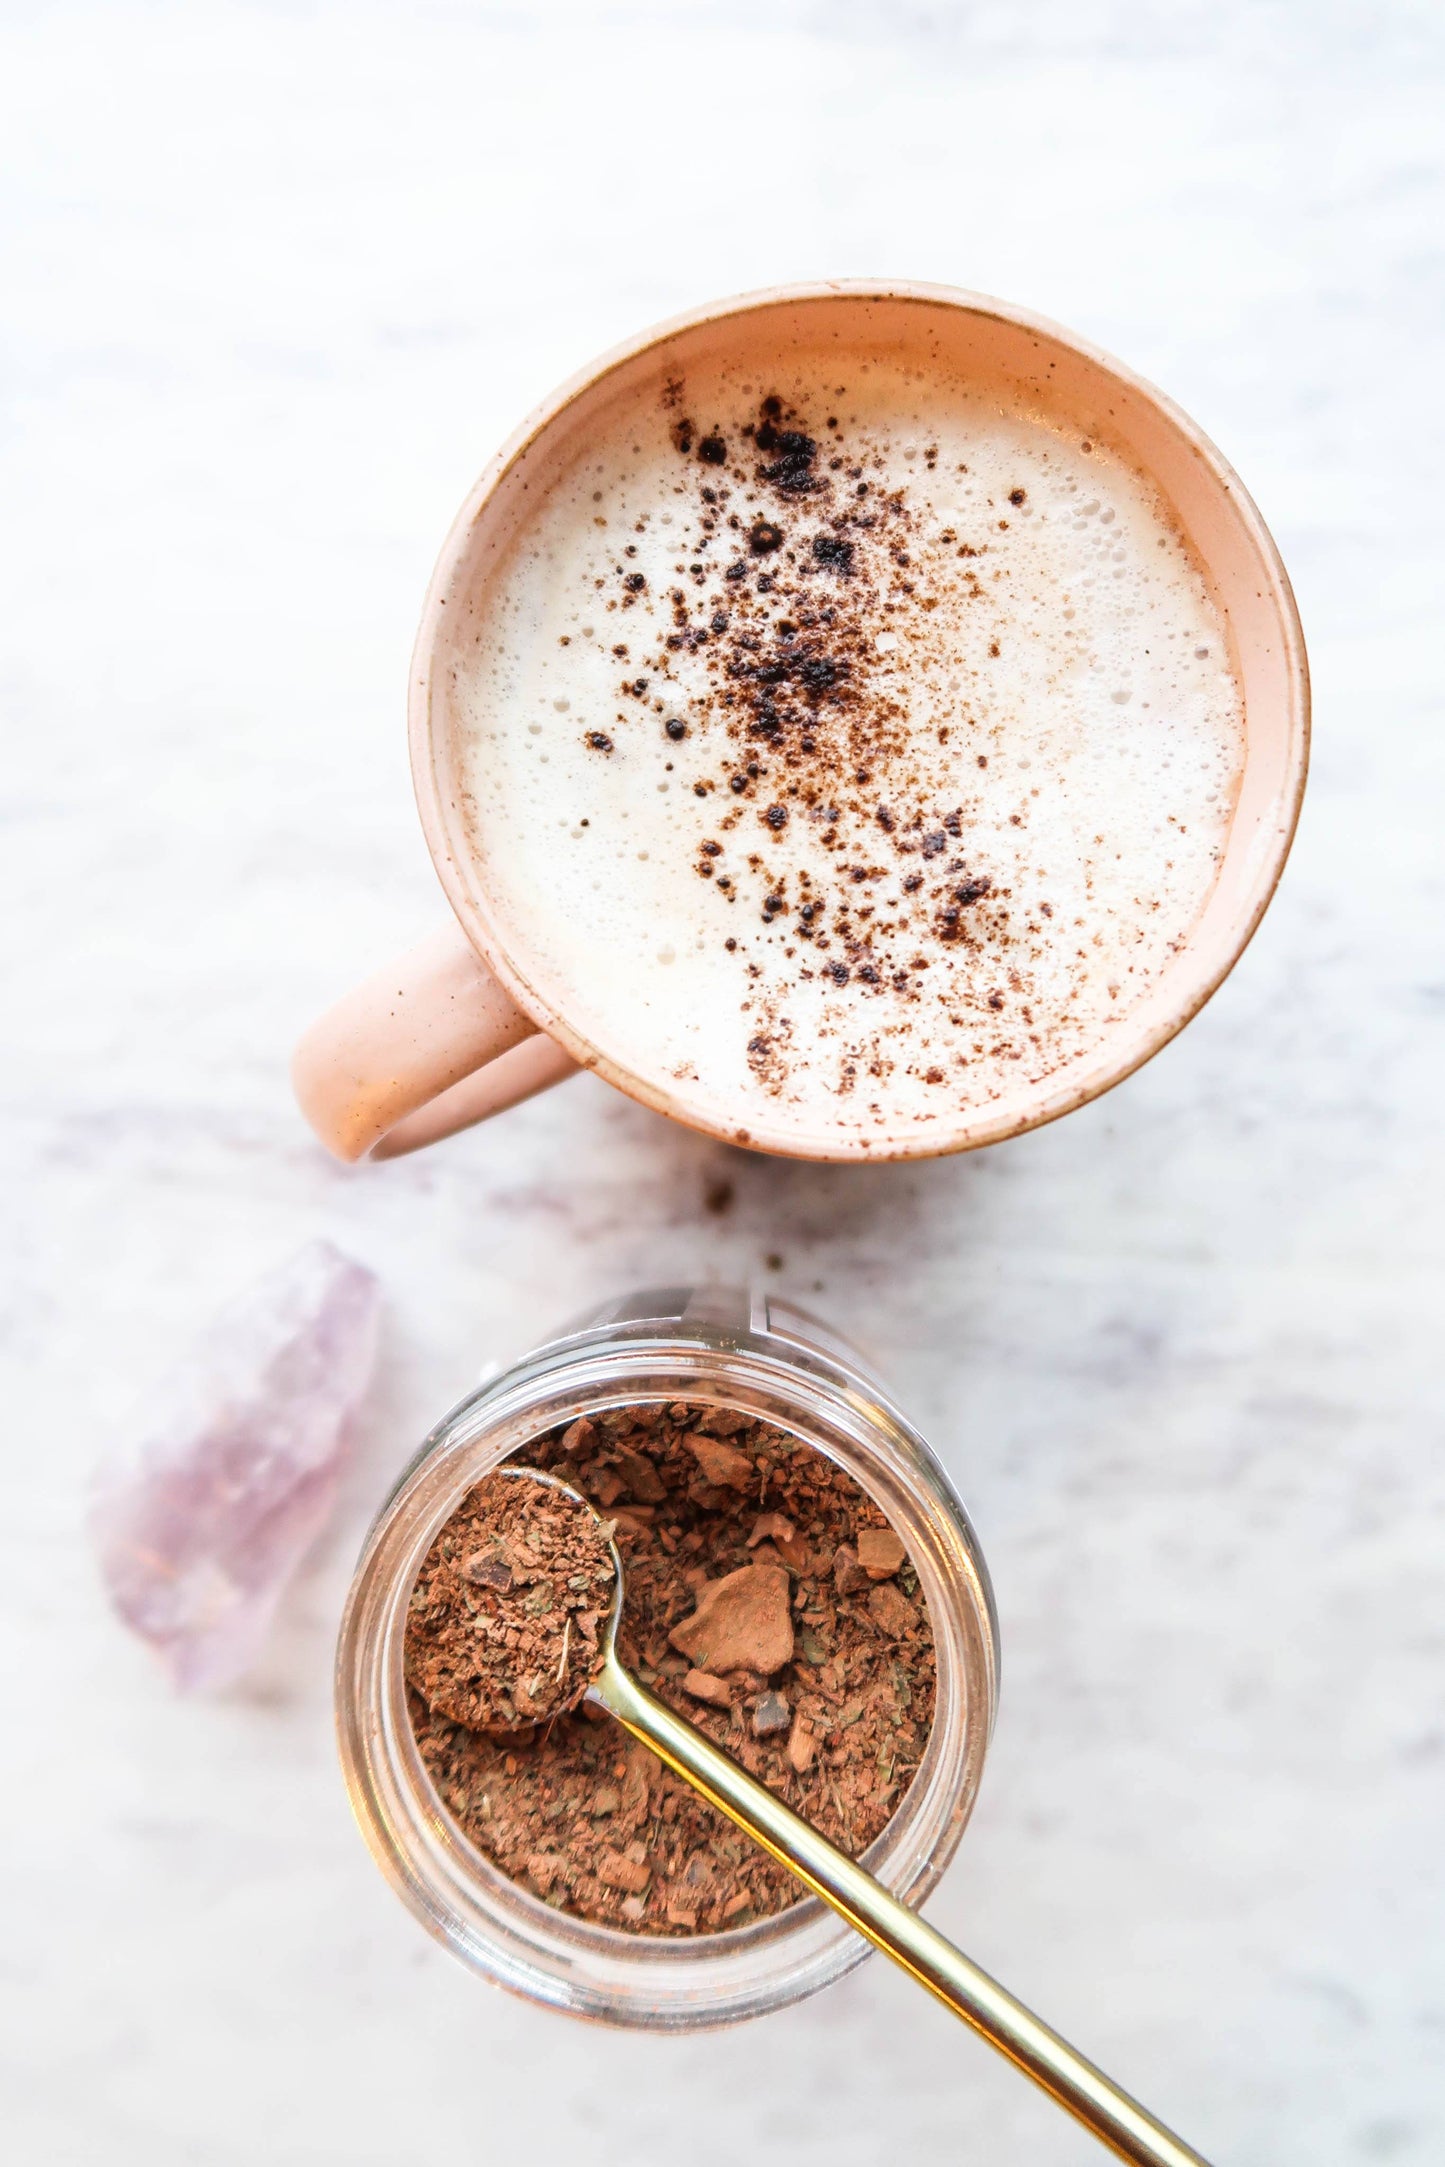 Mint Cacao Bliss Tea by Lake & Oak Tea Co. Wellness Lake & Oak Prettycleanshop